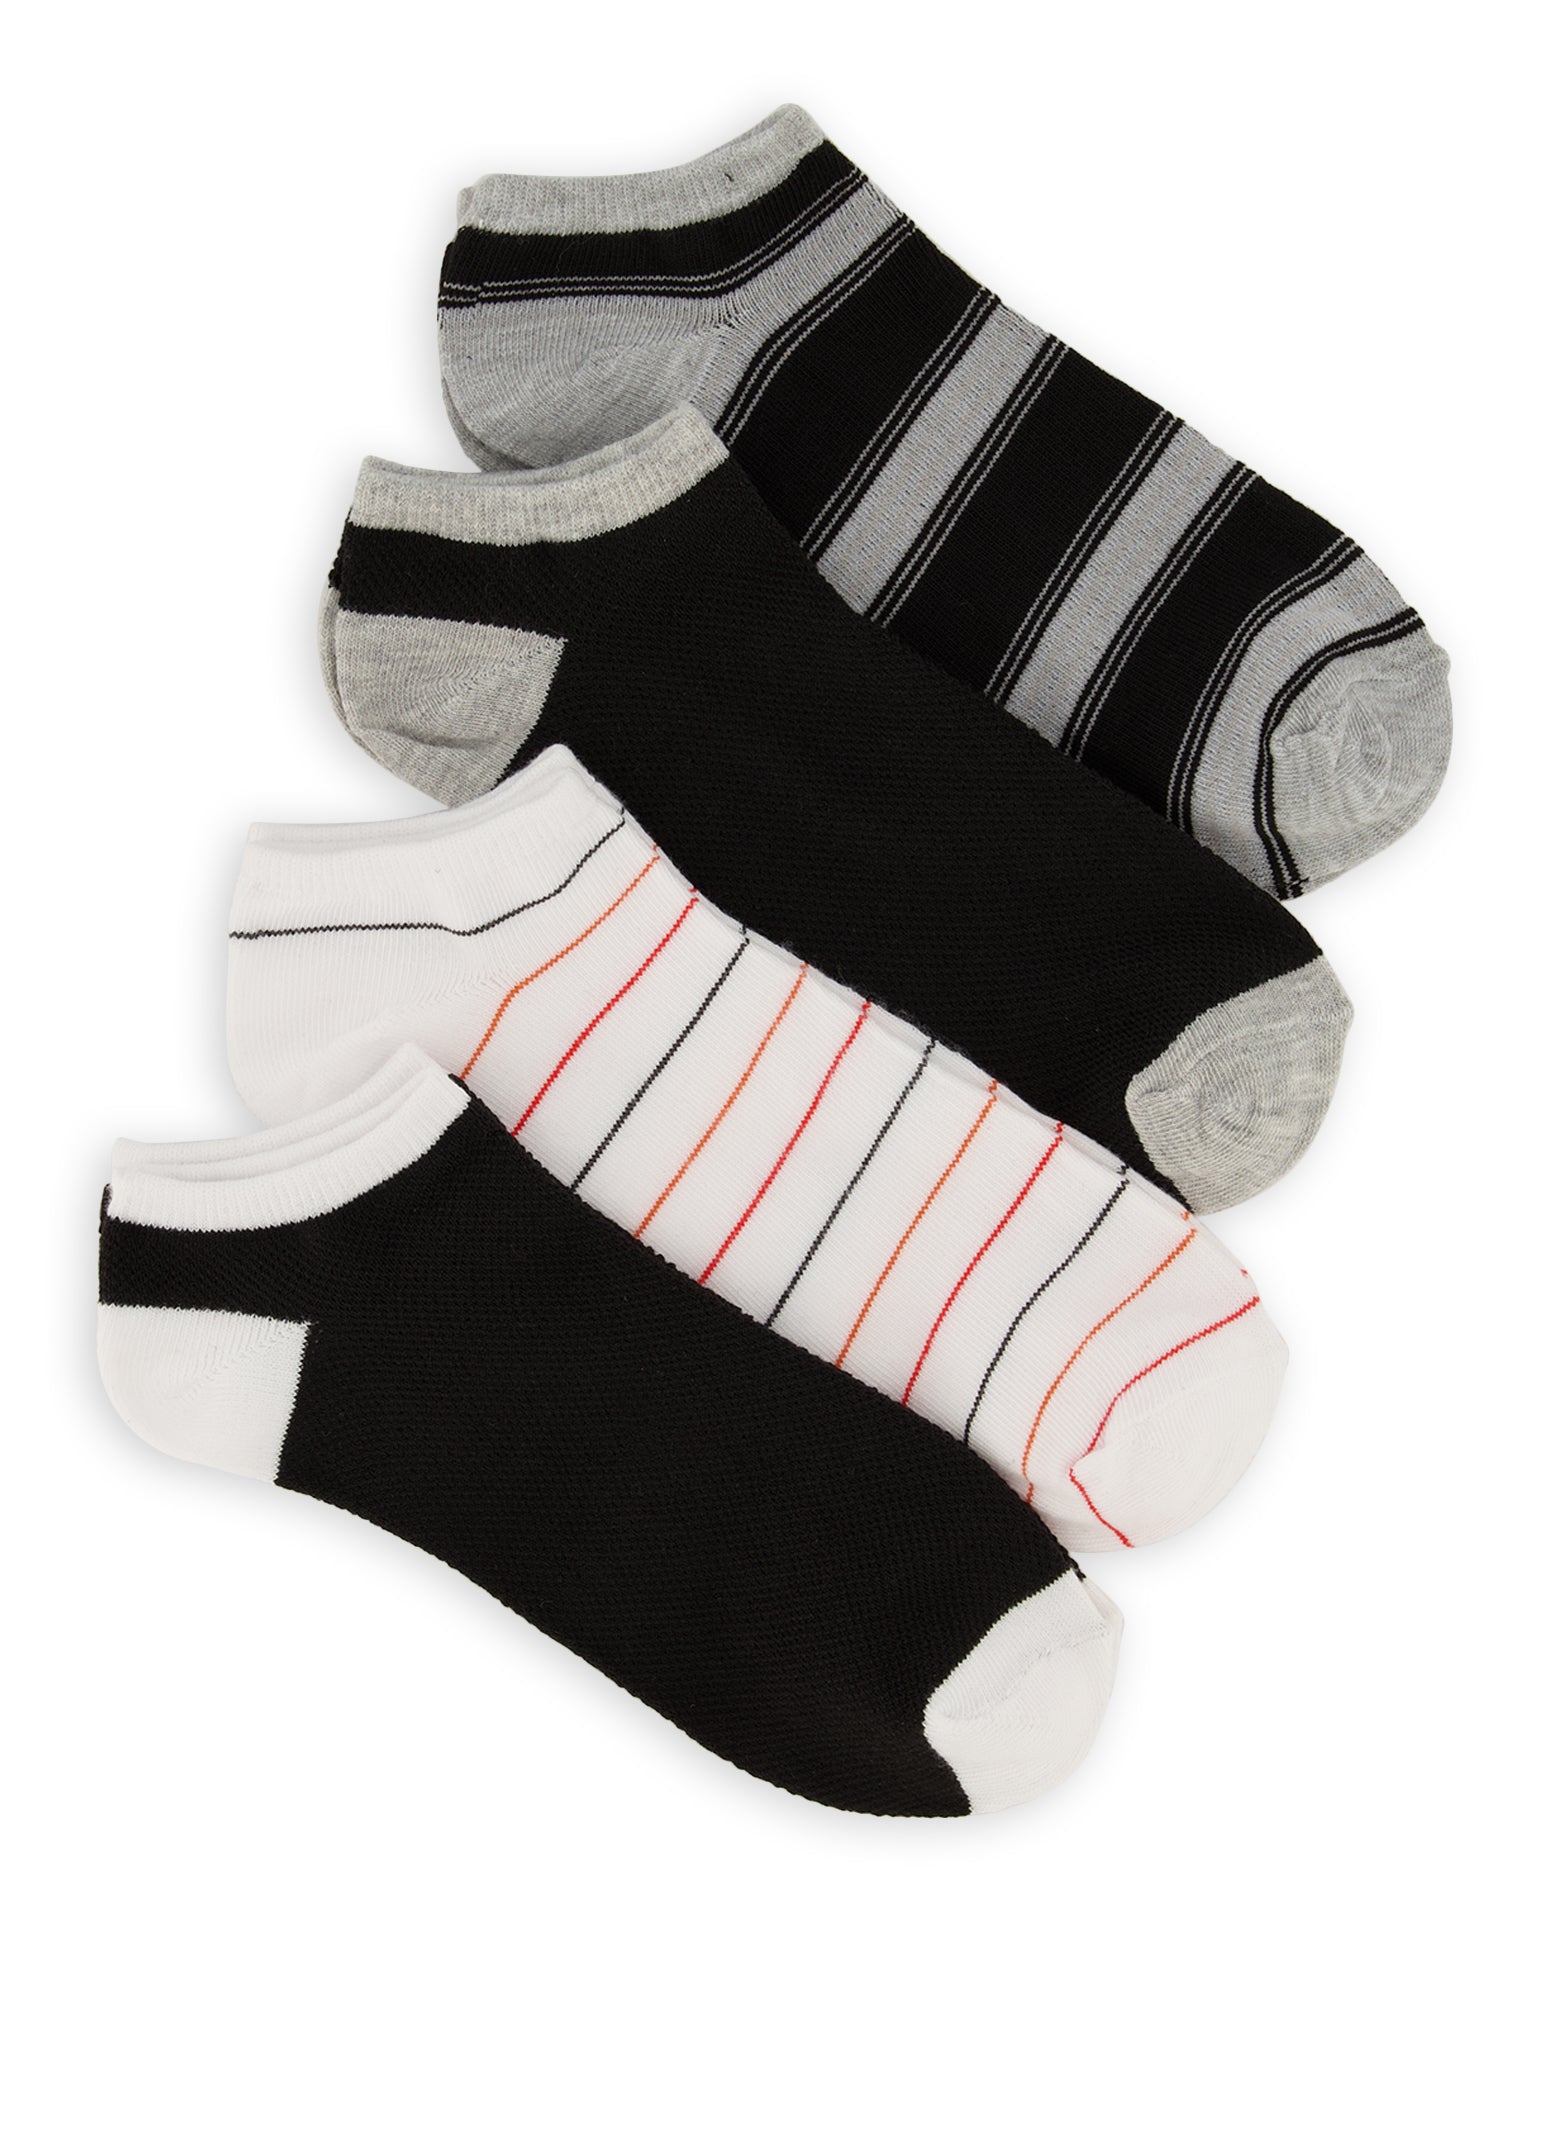 4 Pack Assorted Ankle Socks Size 9-11 - Black